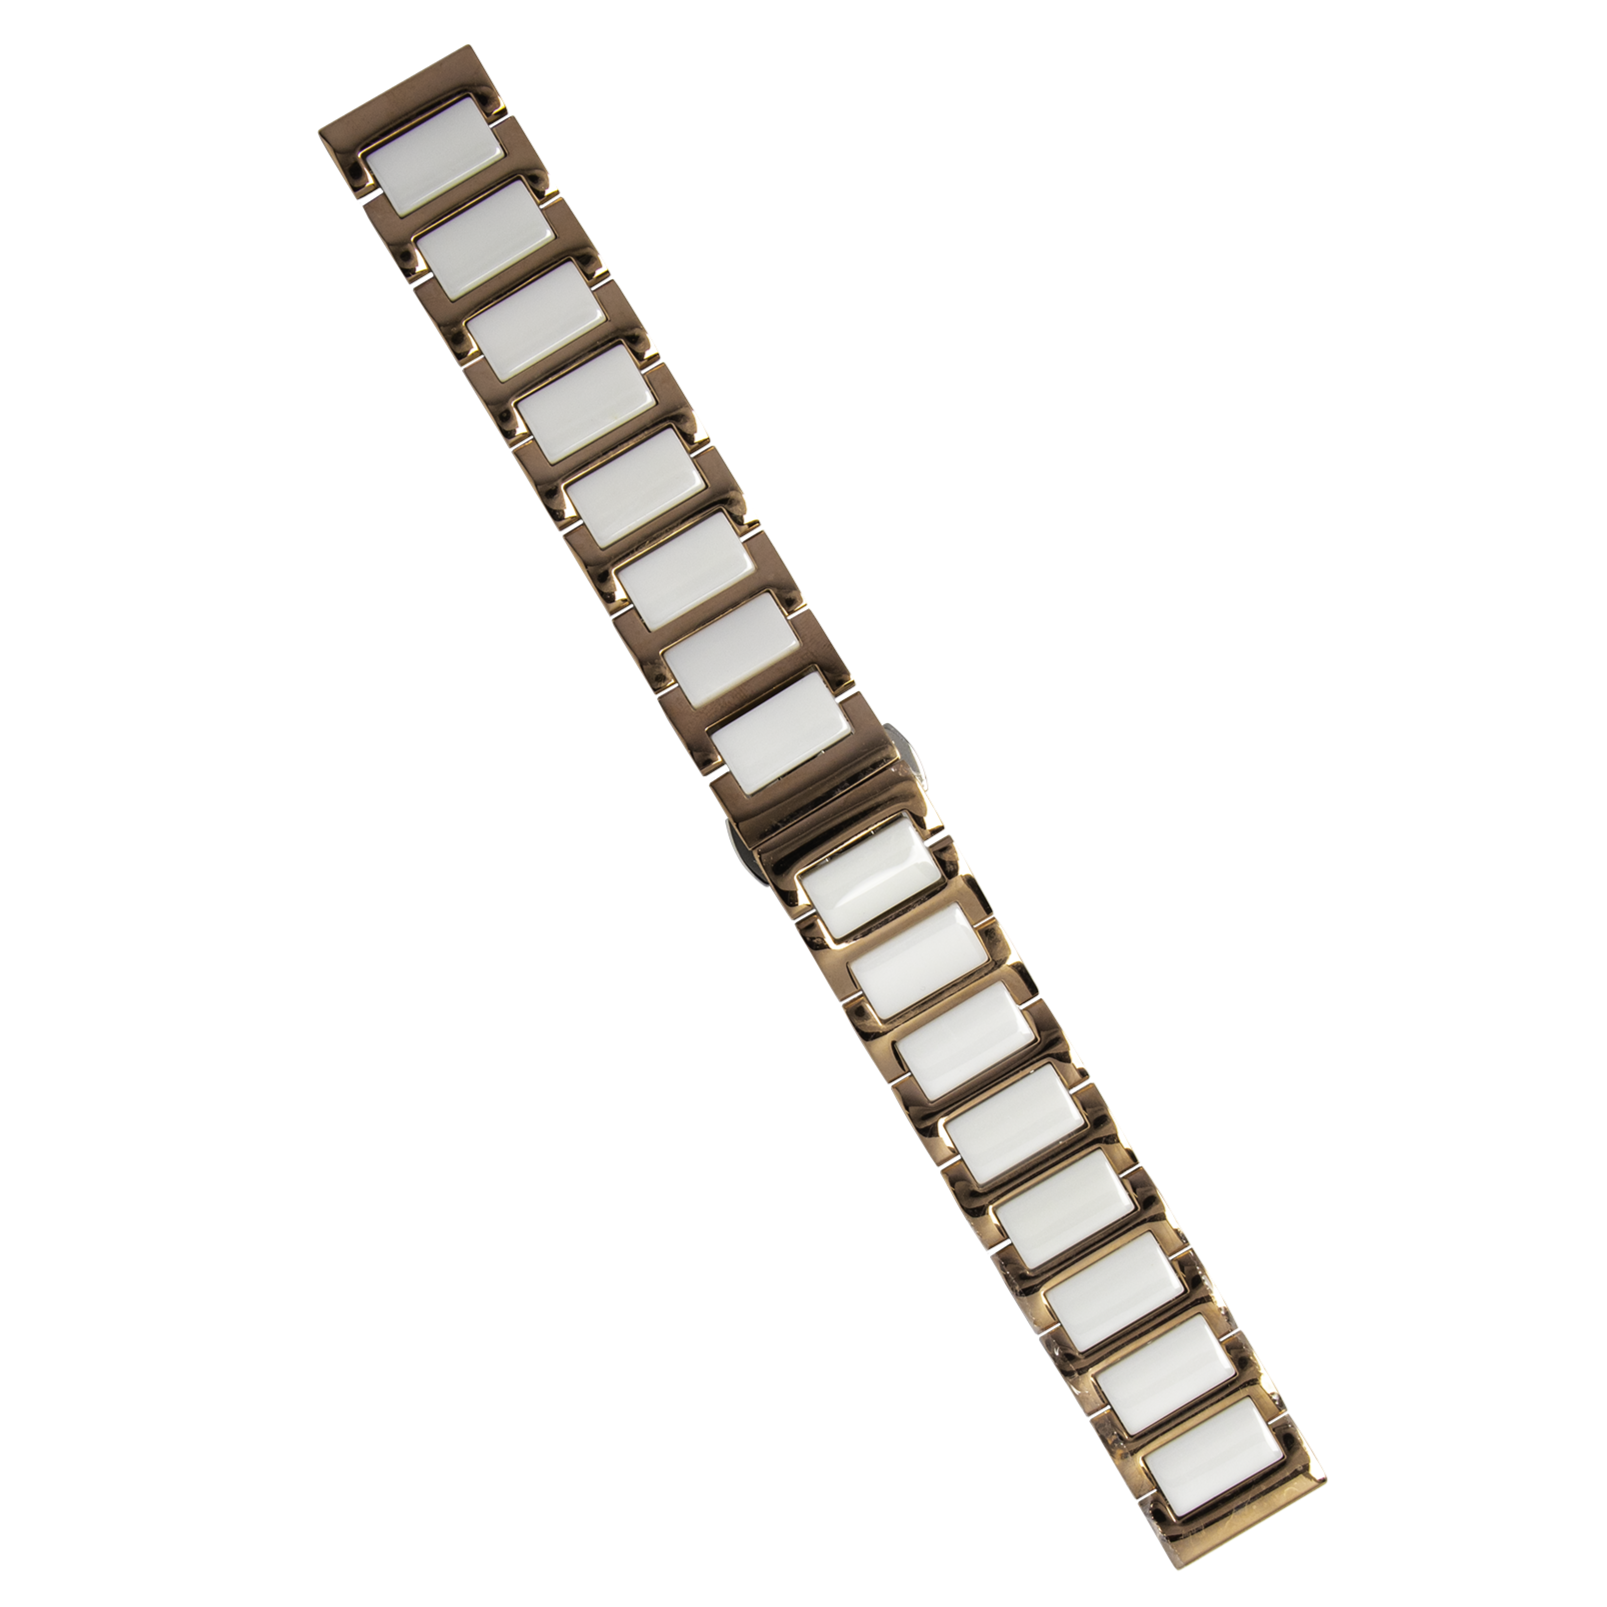 [QuickFit] Ceramic Bracelet - Rose Gold / White - Deployant Clasp 20mm